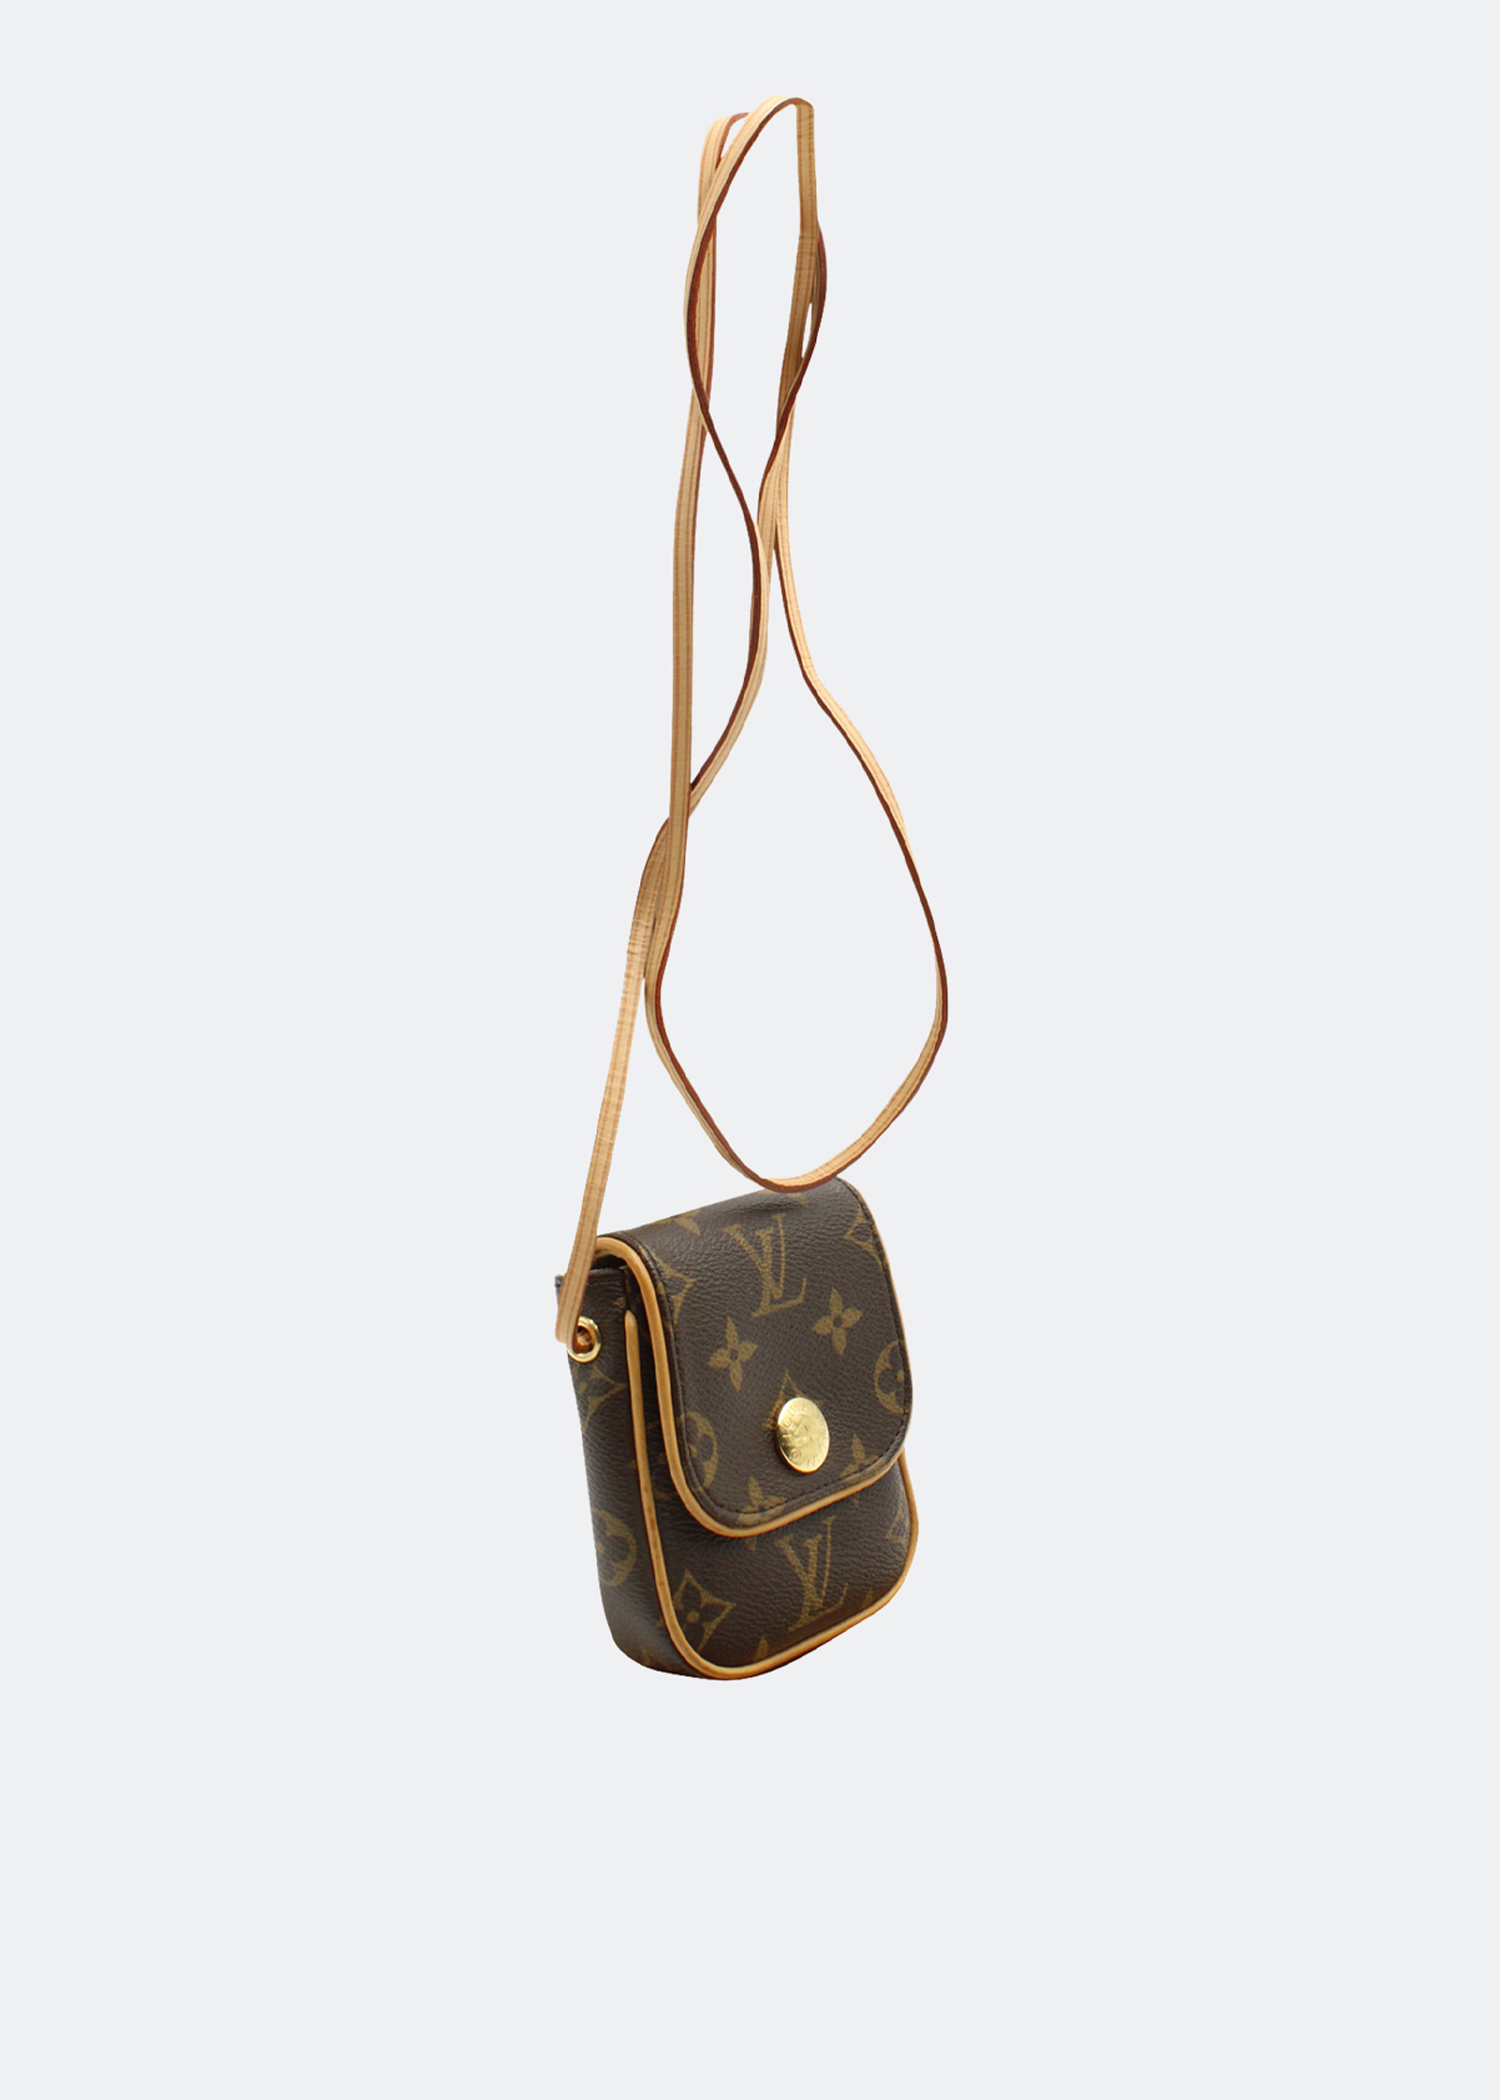 Louis Vuitton Cancun Brown Canvas Clutch Bag (Pre-Owned)